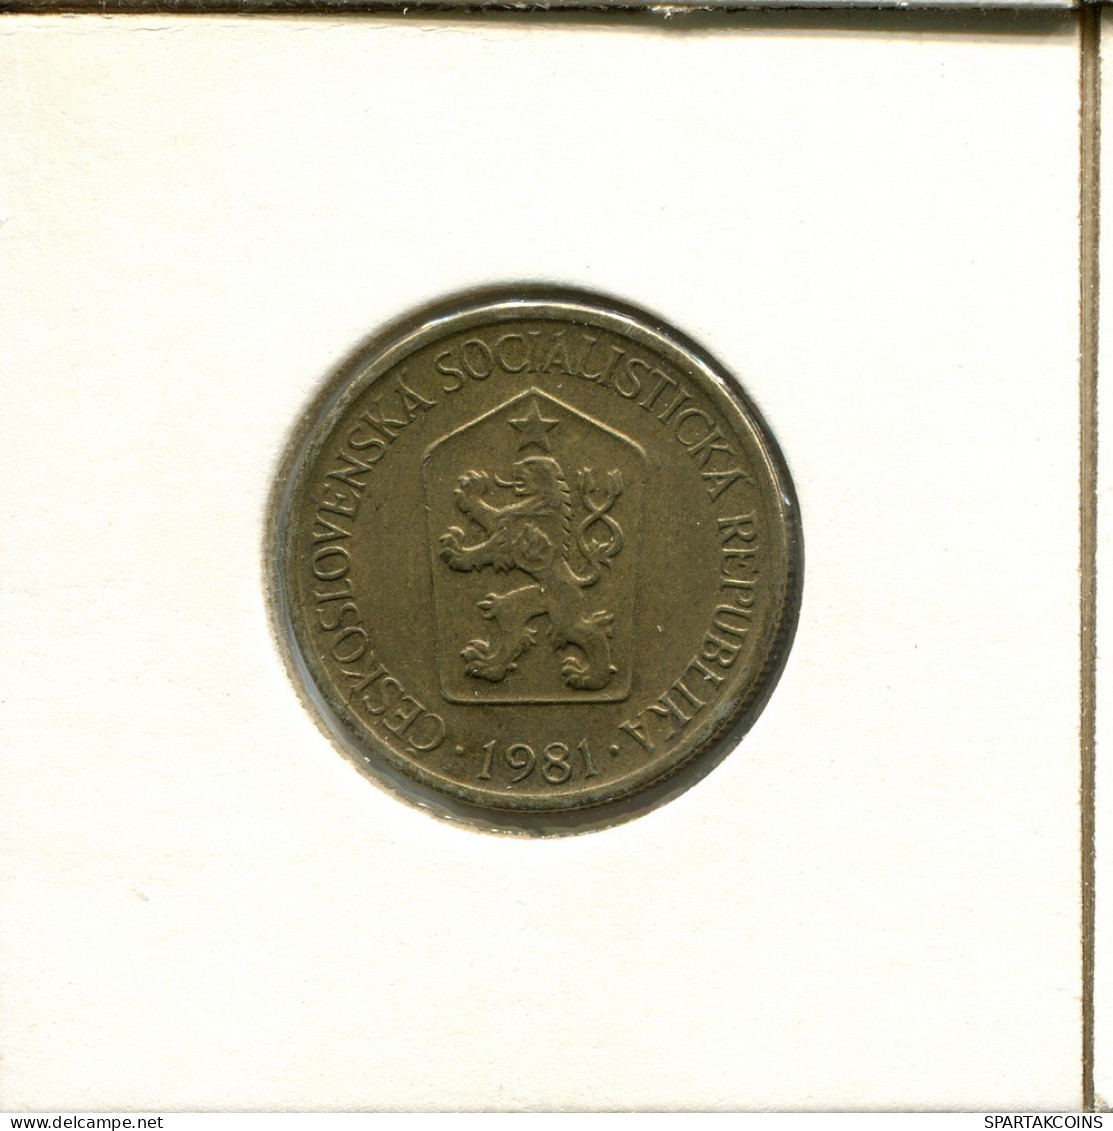 1 KORUNA 1981 CZECHOSLOVAKIA Coin #AS969.U.A - Tsjechoslowakije